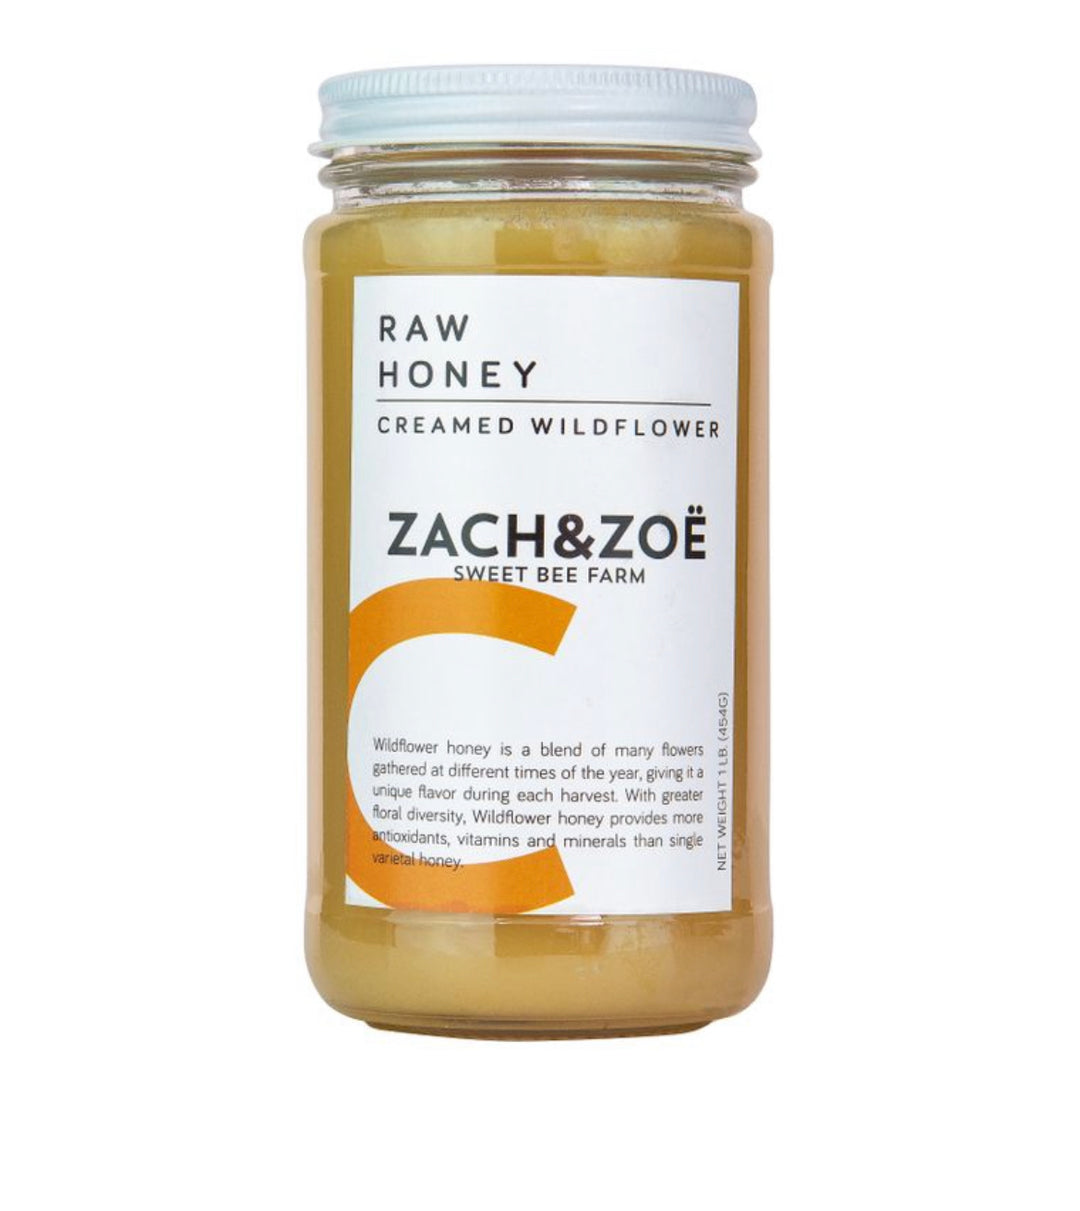 zach and zoe creamed wildflower honey